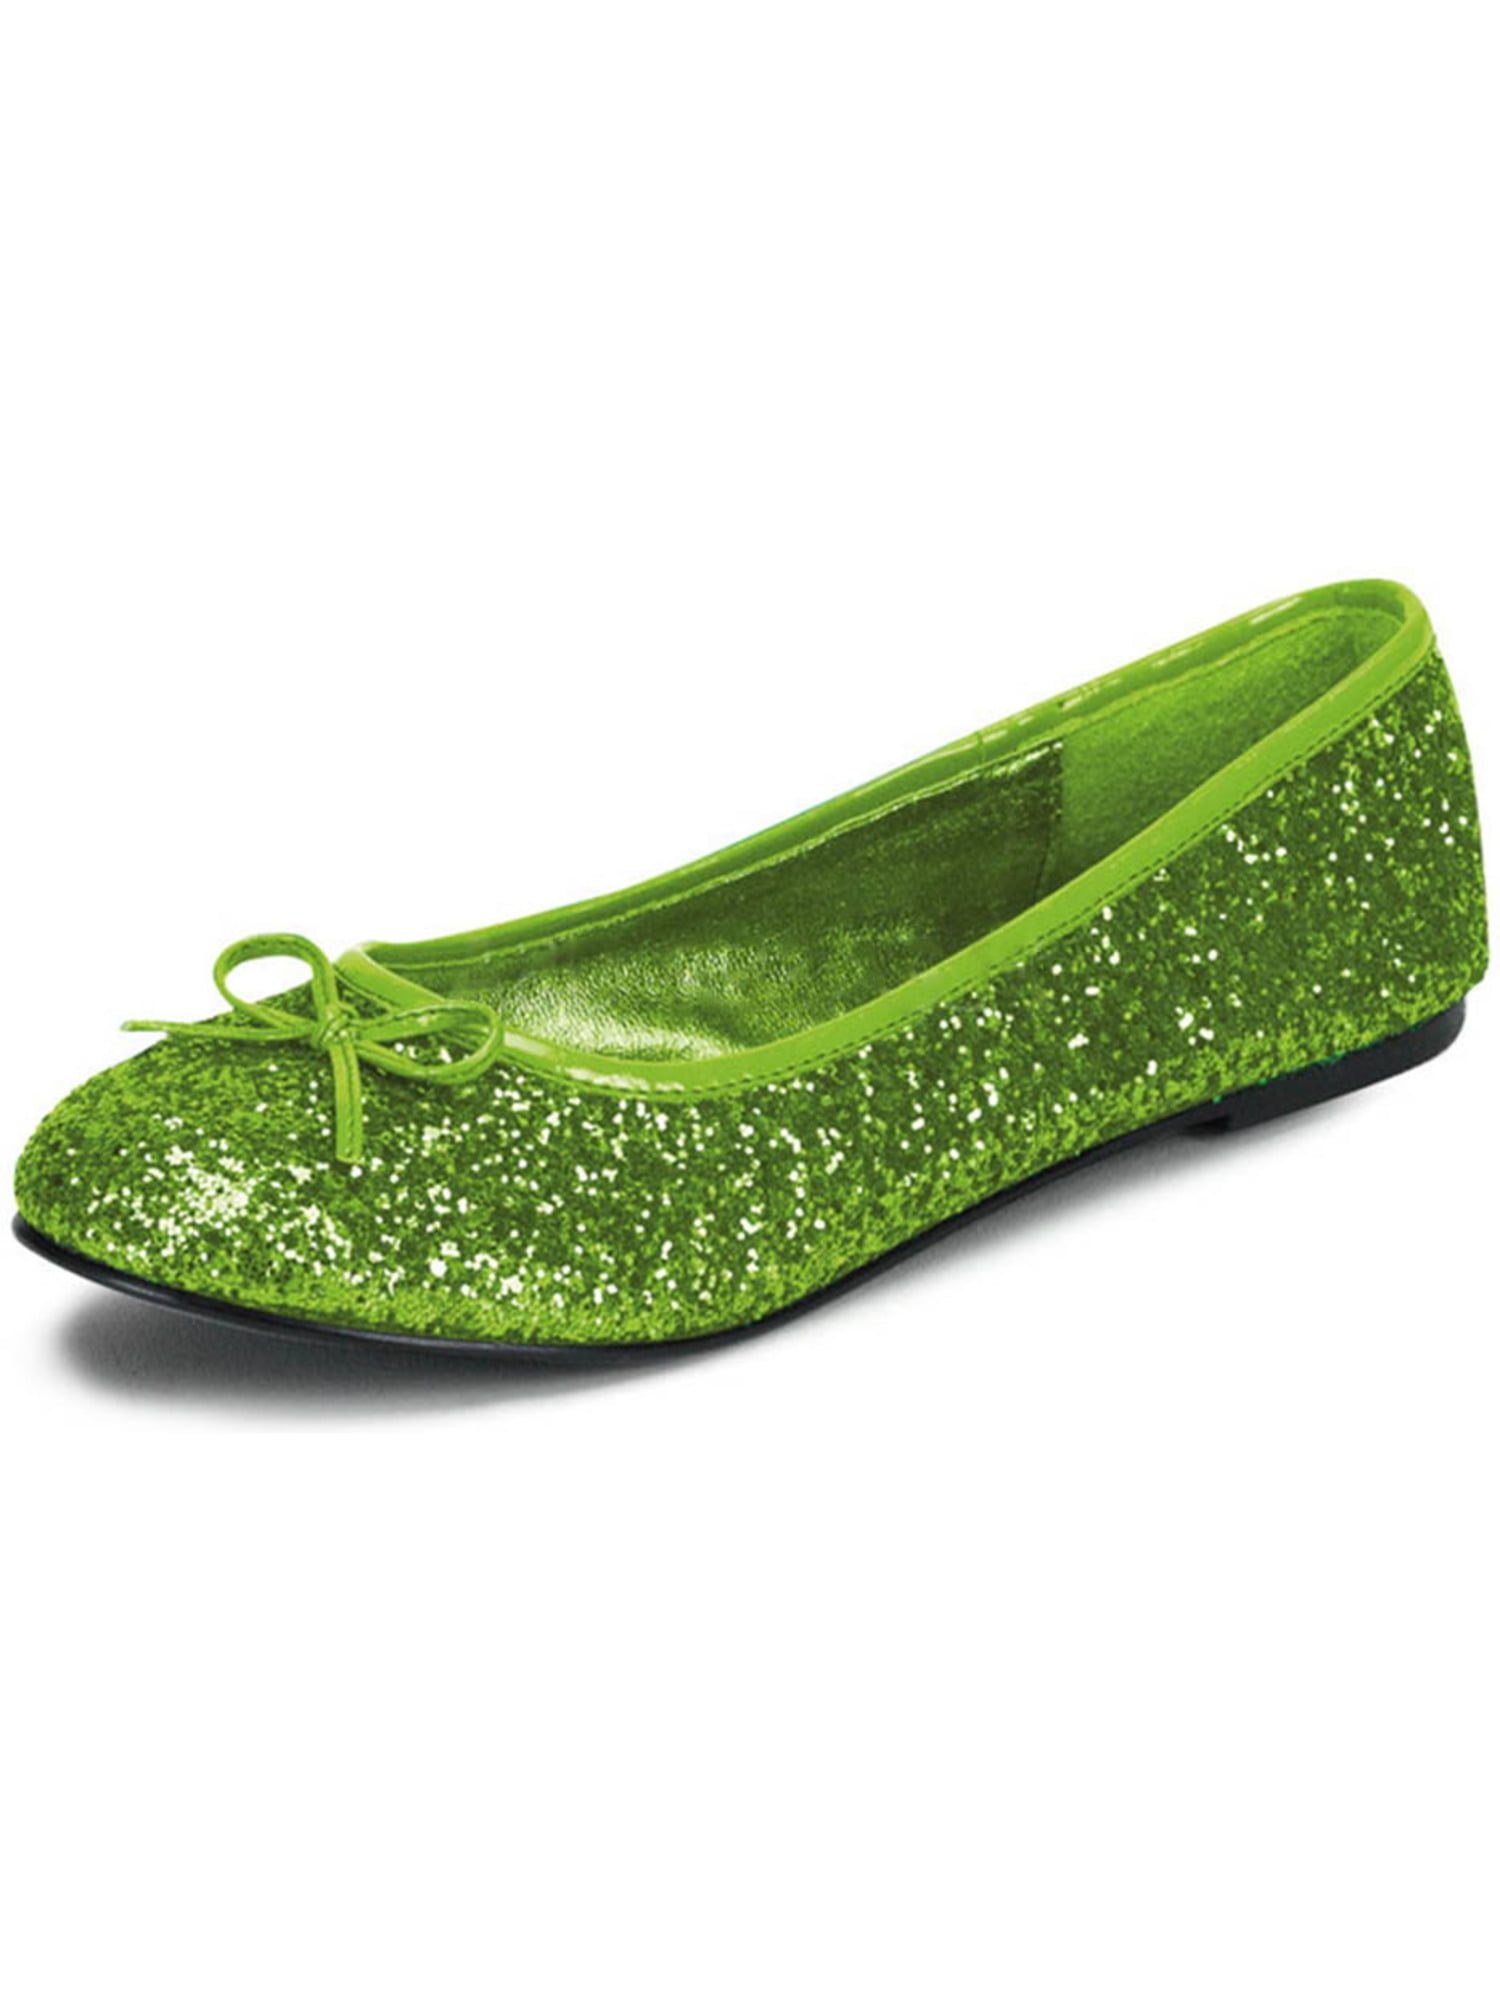 lime green flats women's shoes